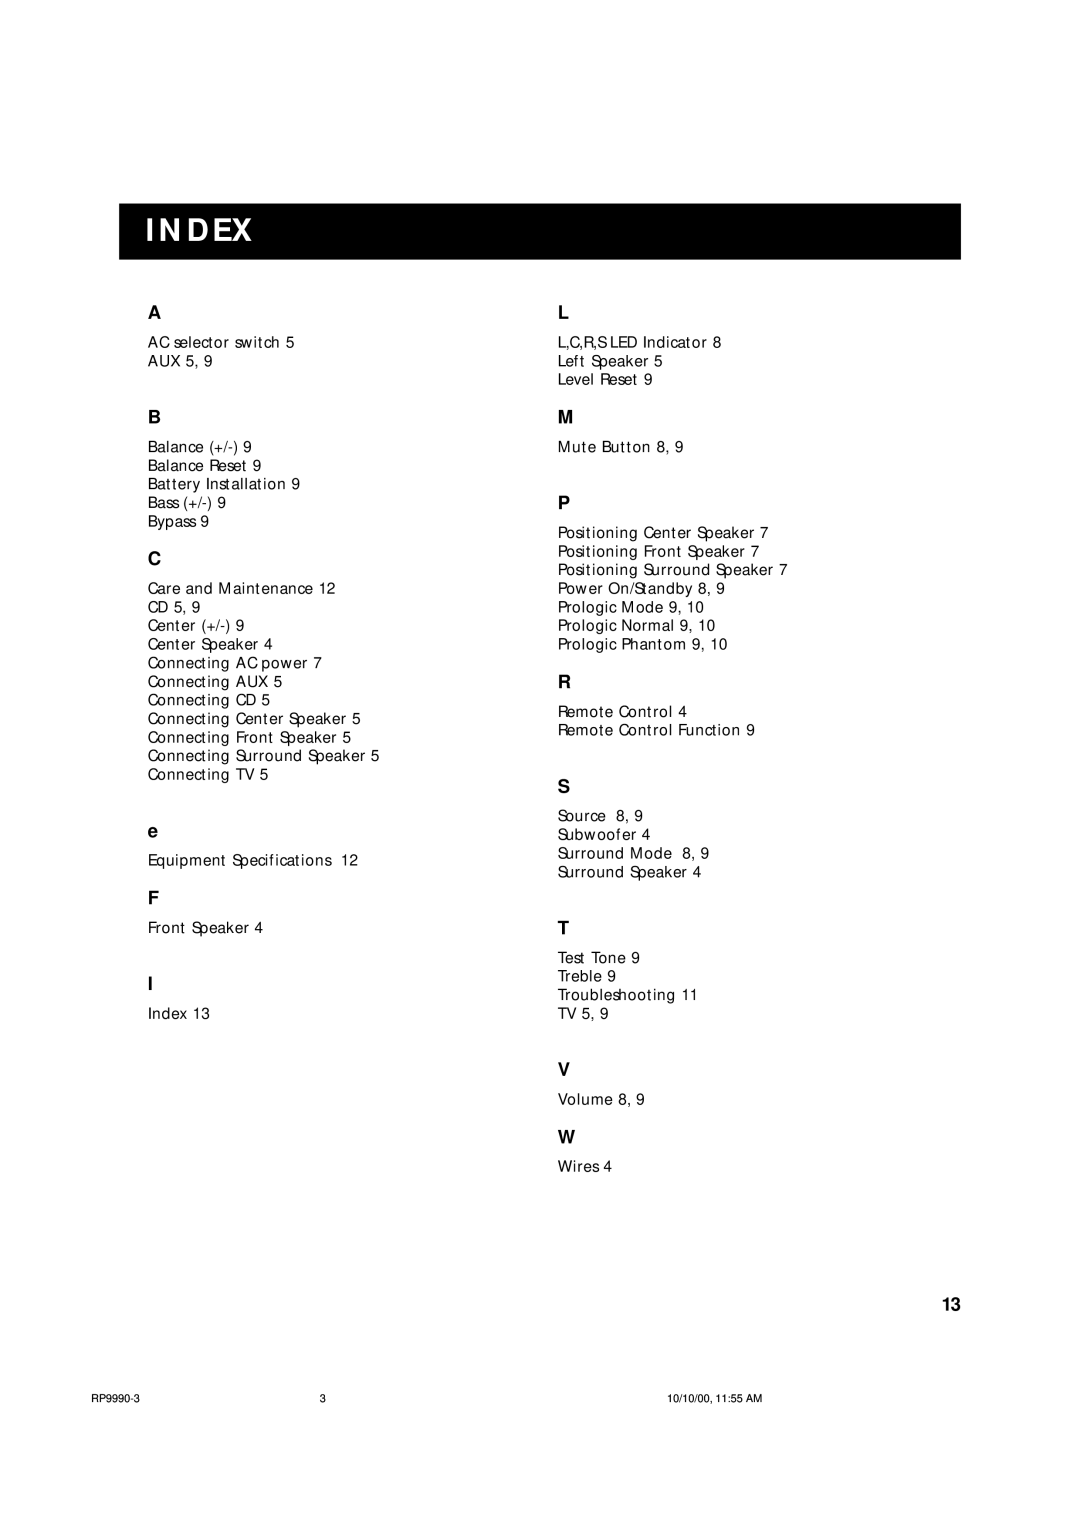 RCA RP-9990 manual Index 